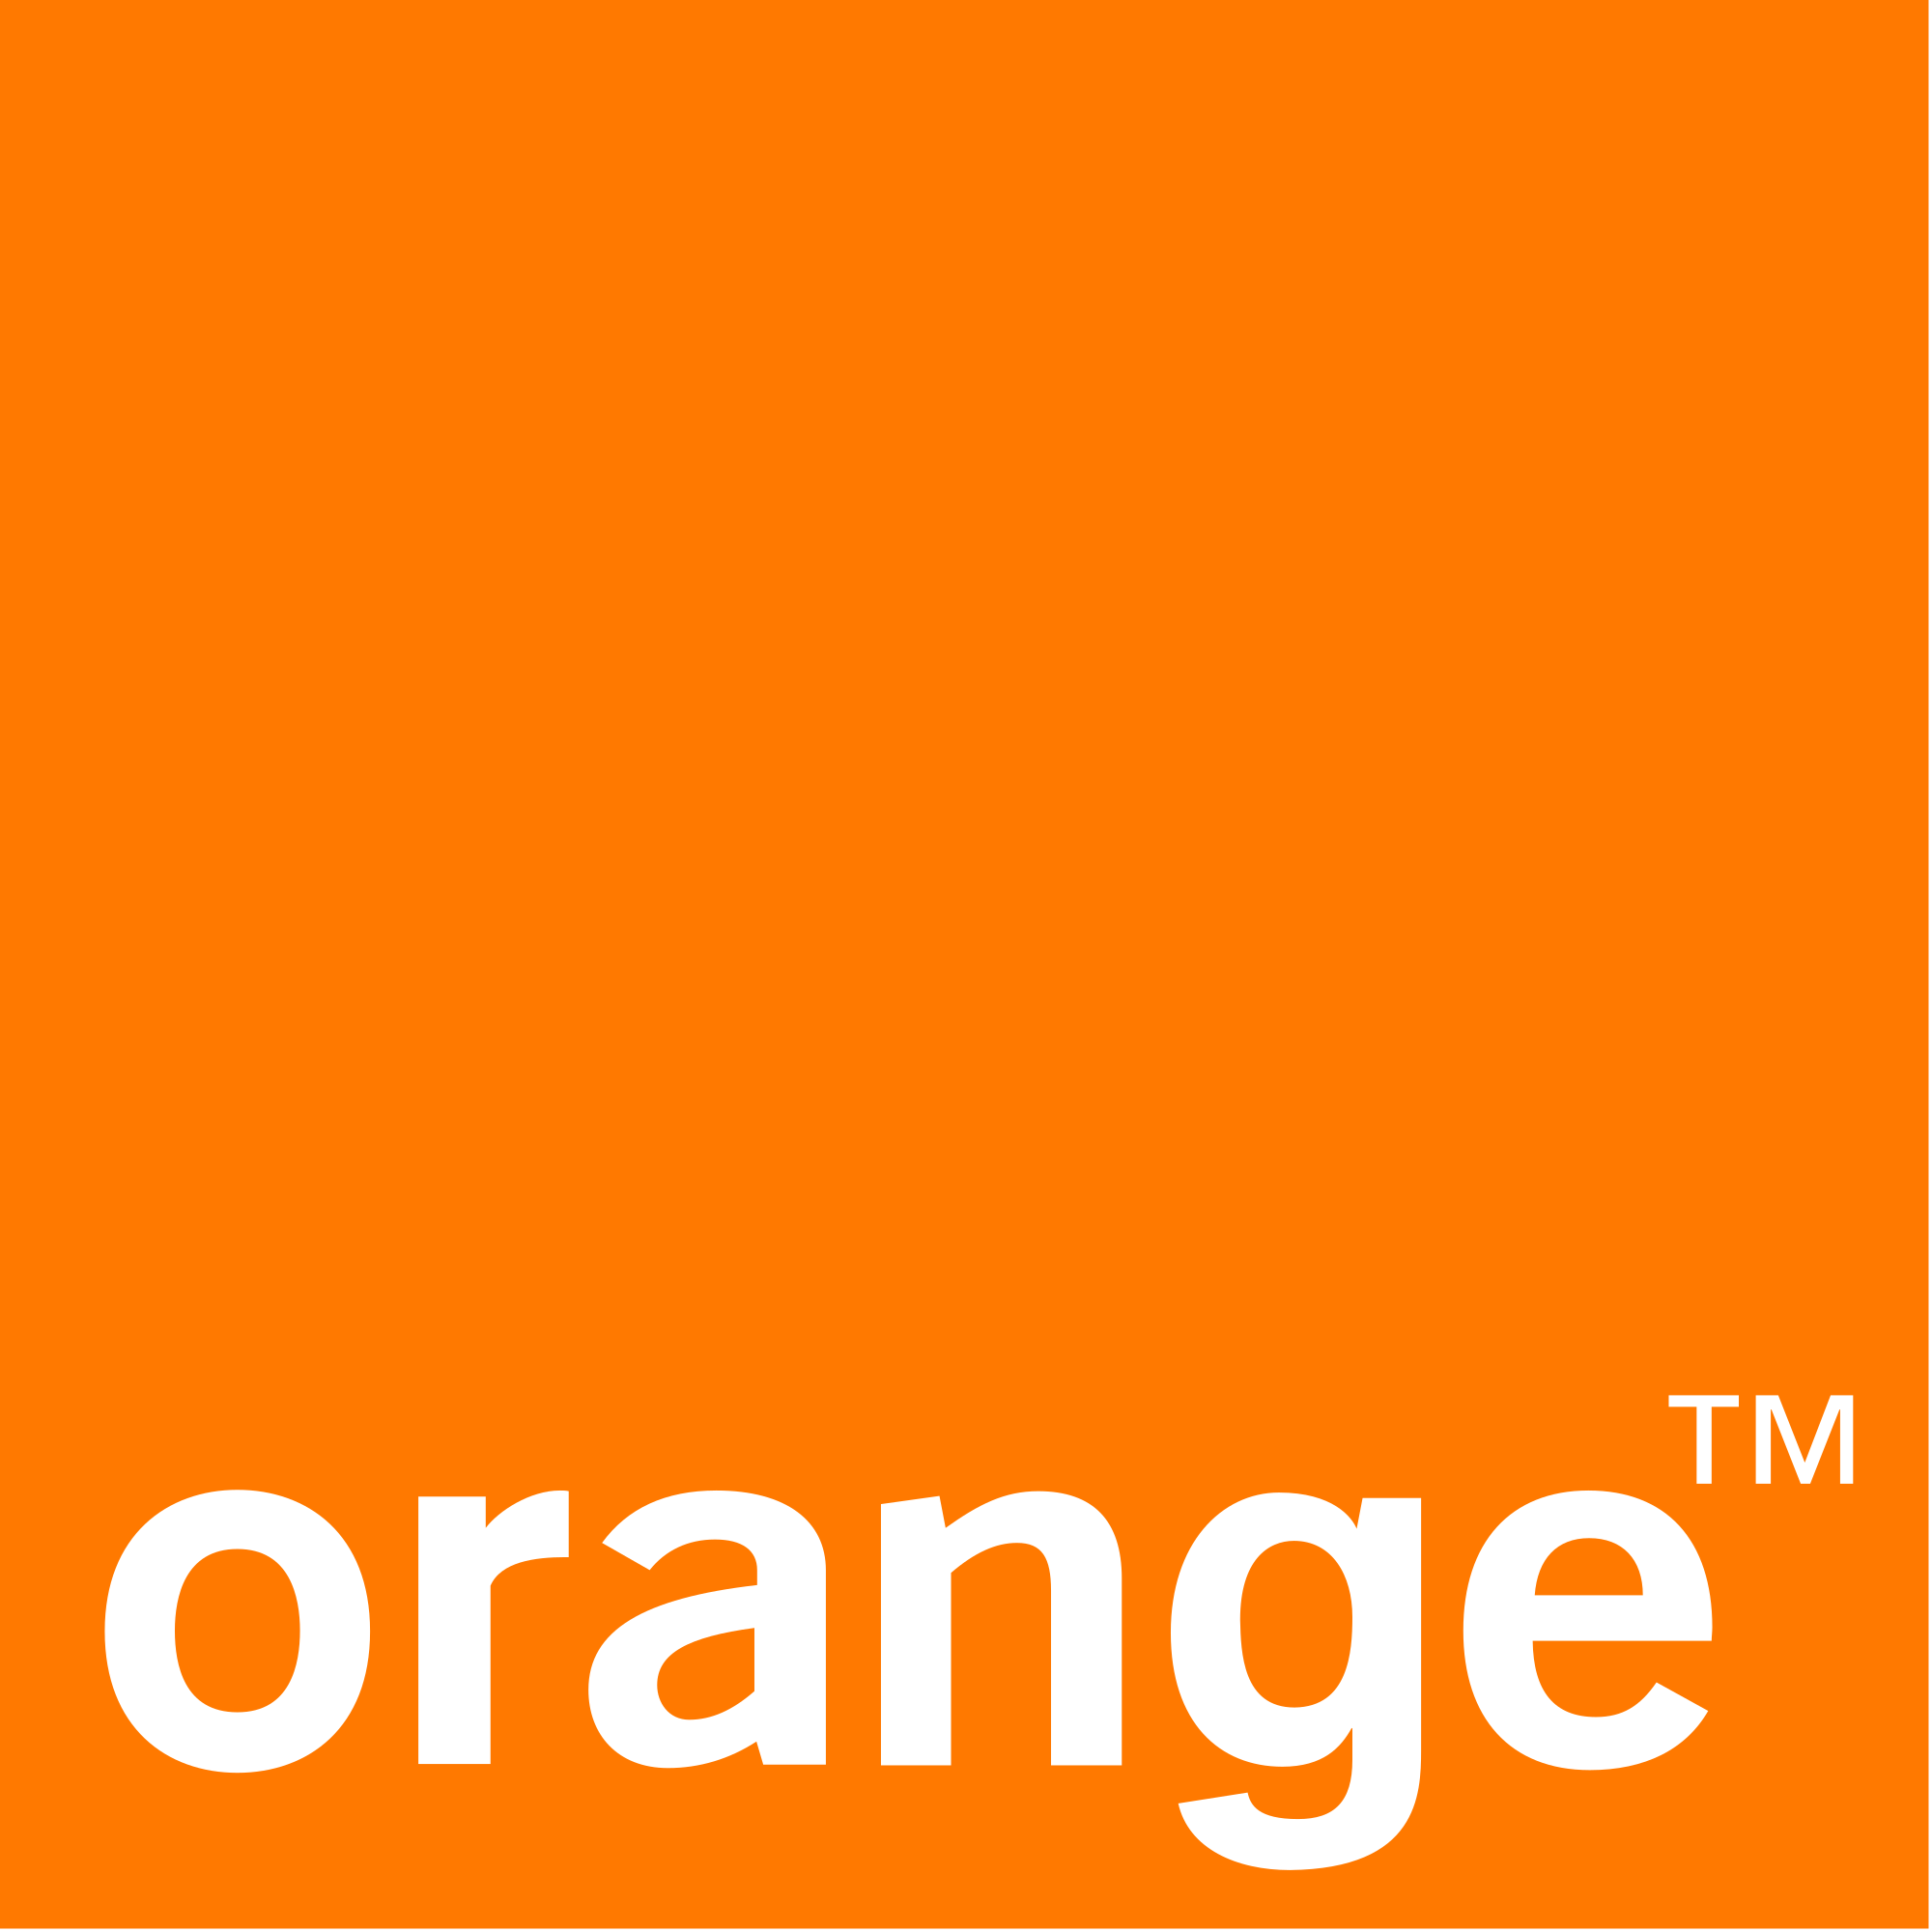 File:Orange logo.svg - Wikimedia Commons